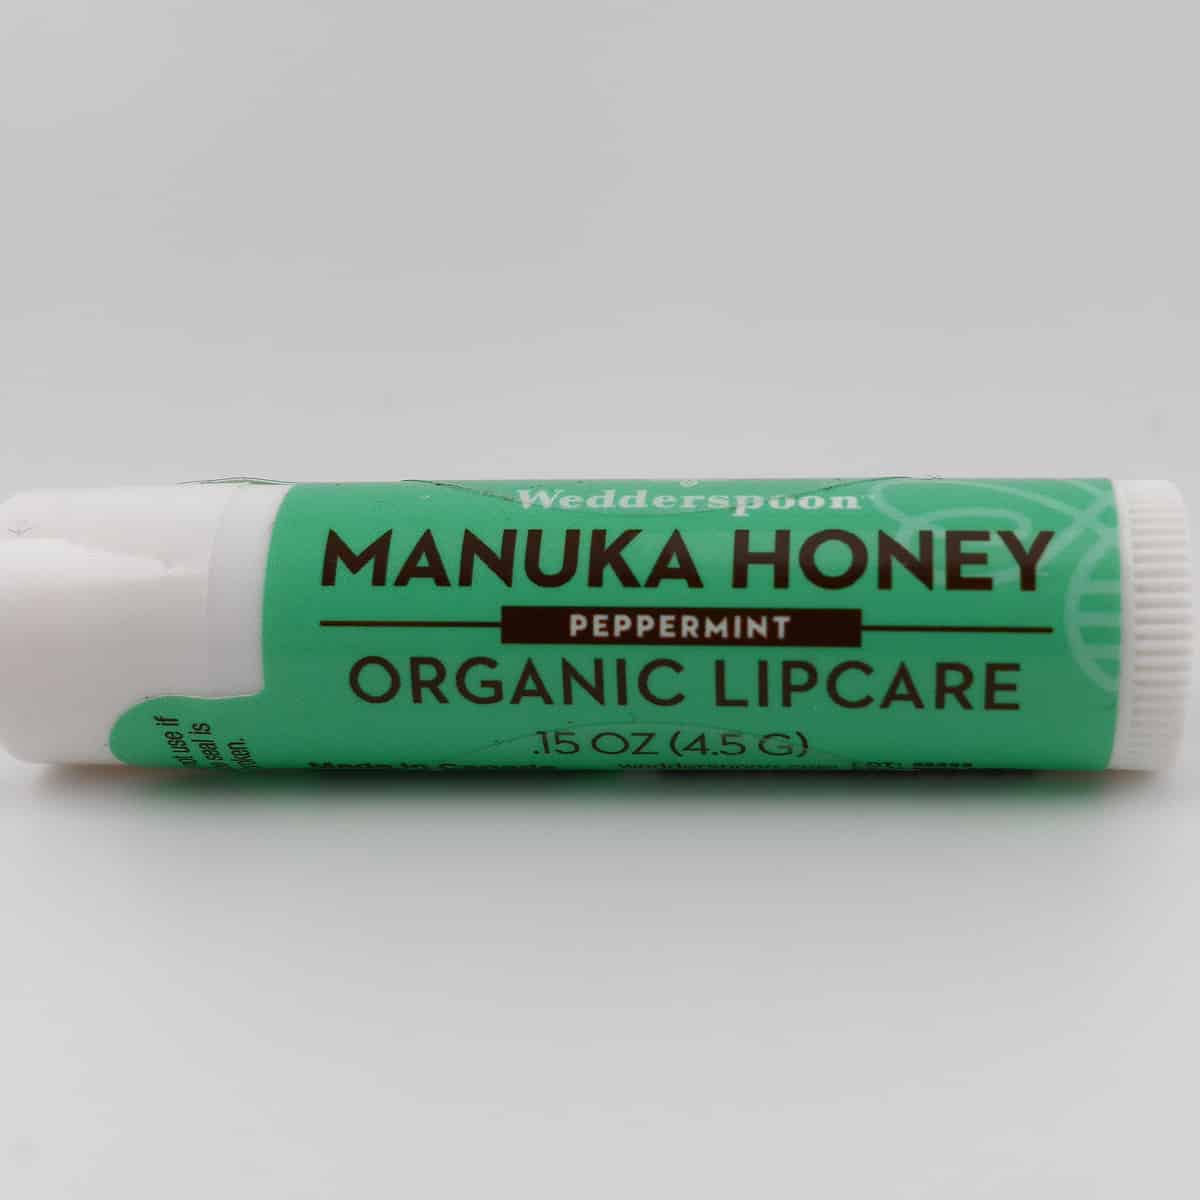 Wedderspoon Manuka Honey Organic Lipcare Review